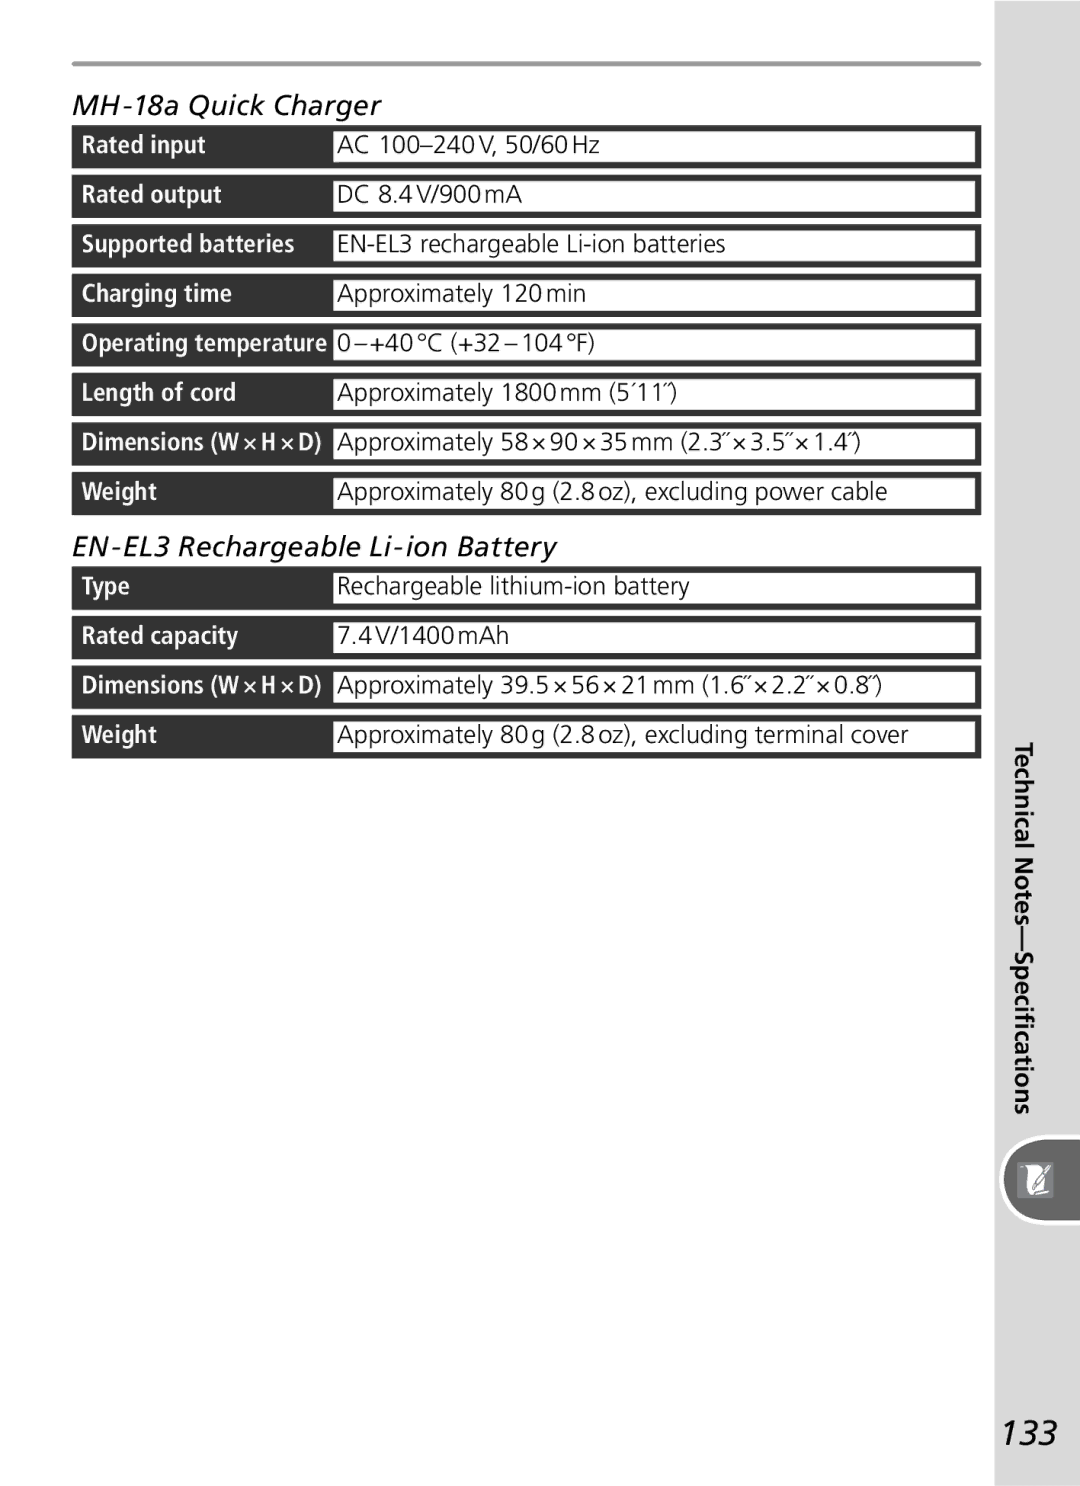 Nikon D50 manual 133, MH-18a Quick Charger, EN-EL3 Rechargeable Li-ion Battery 